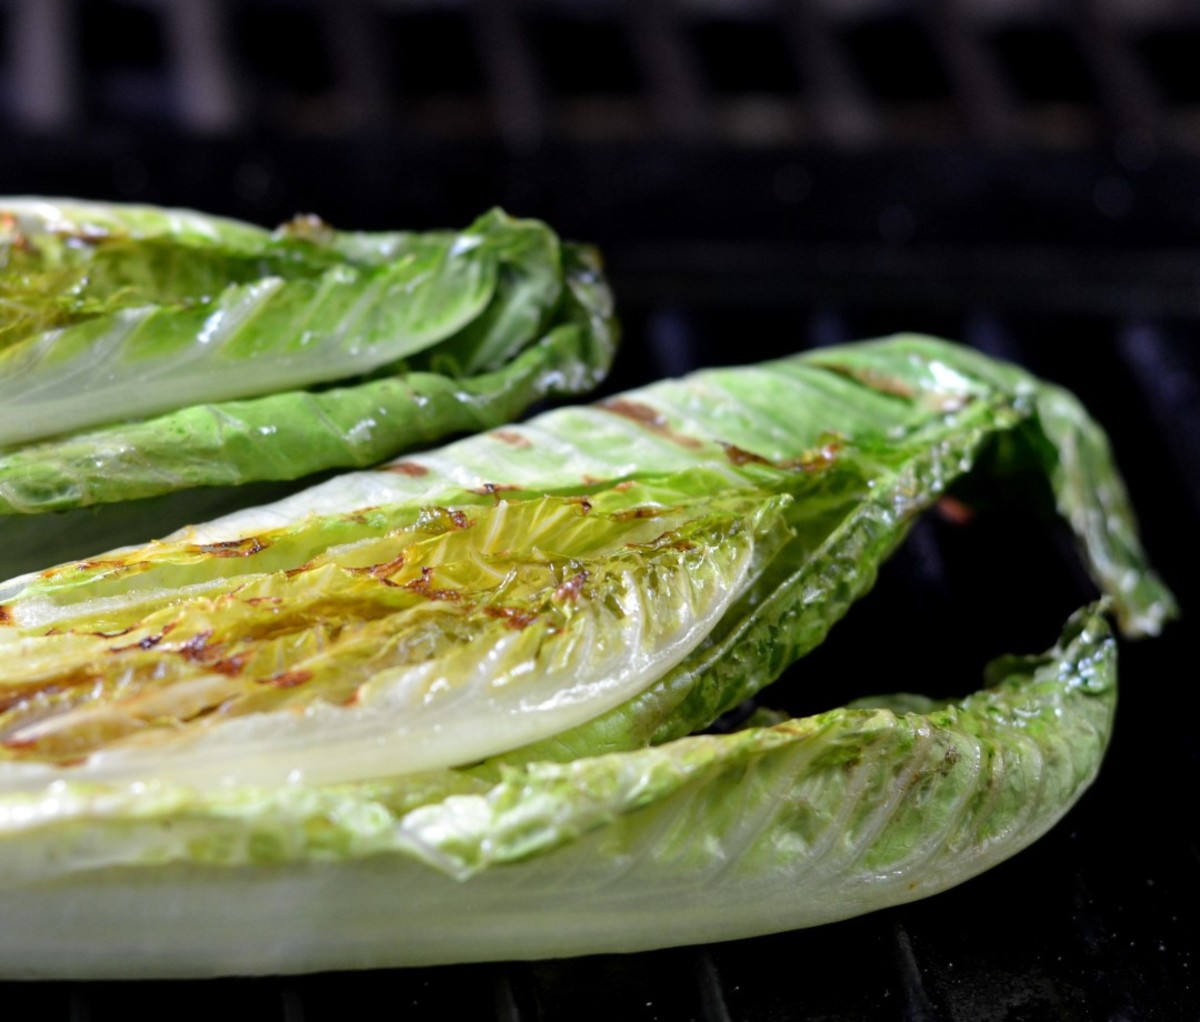 Grilled romaine lettuce